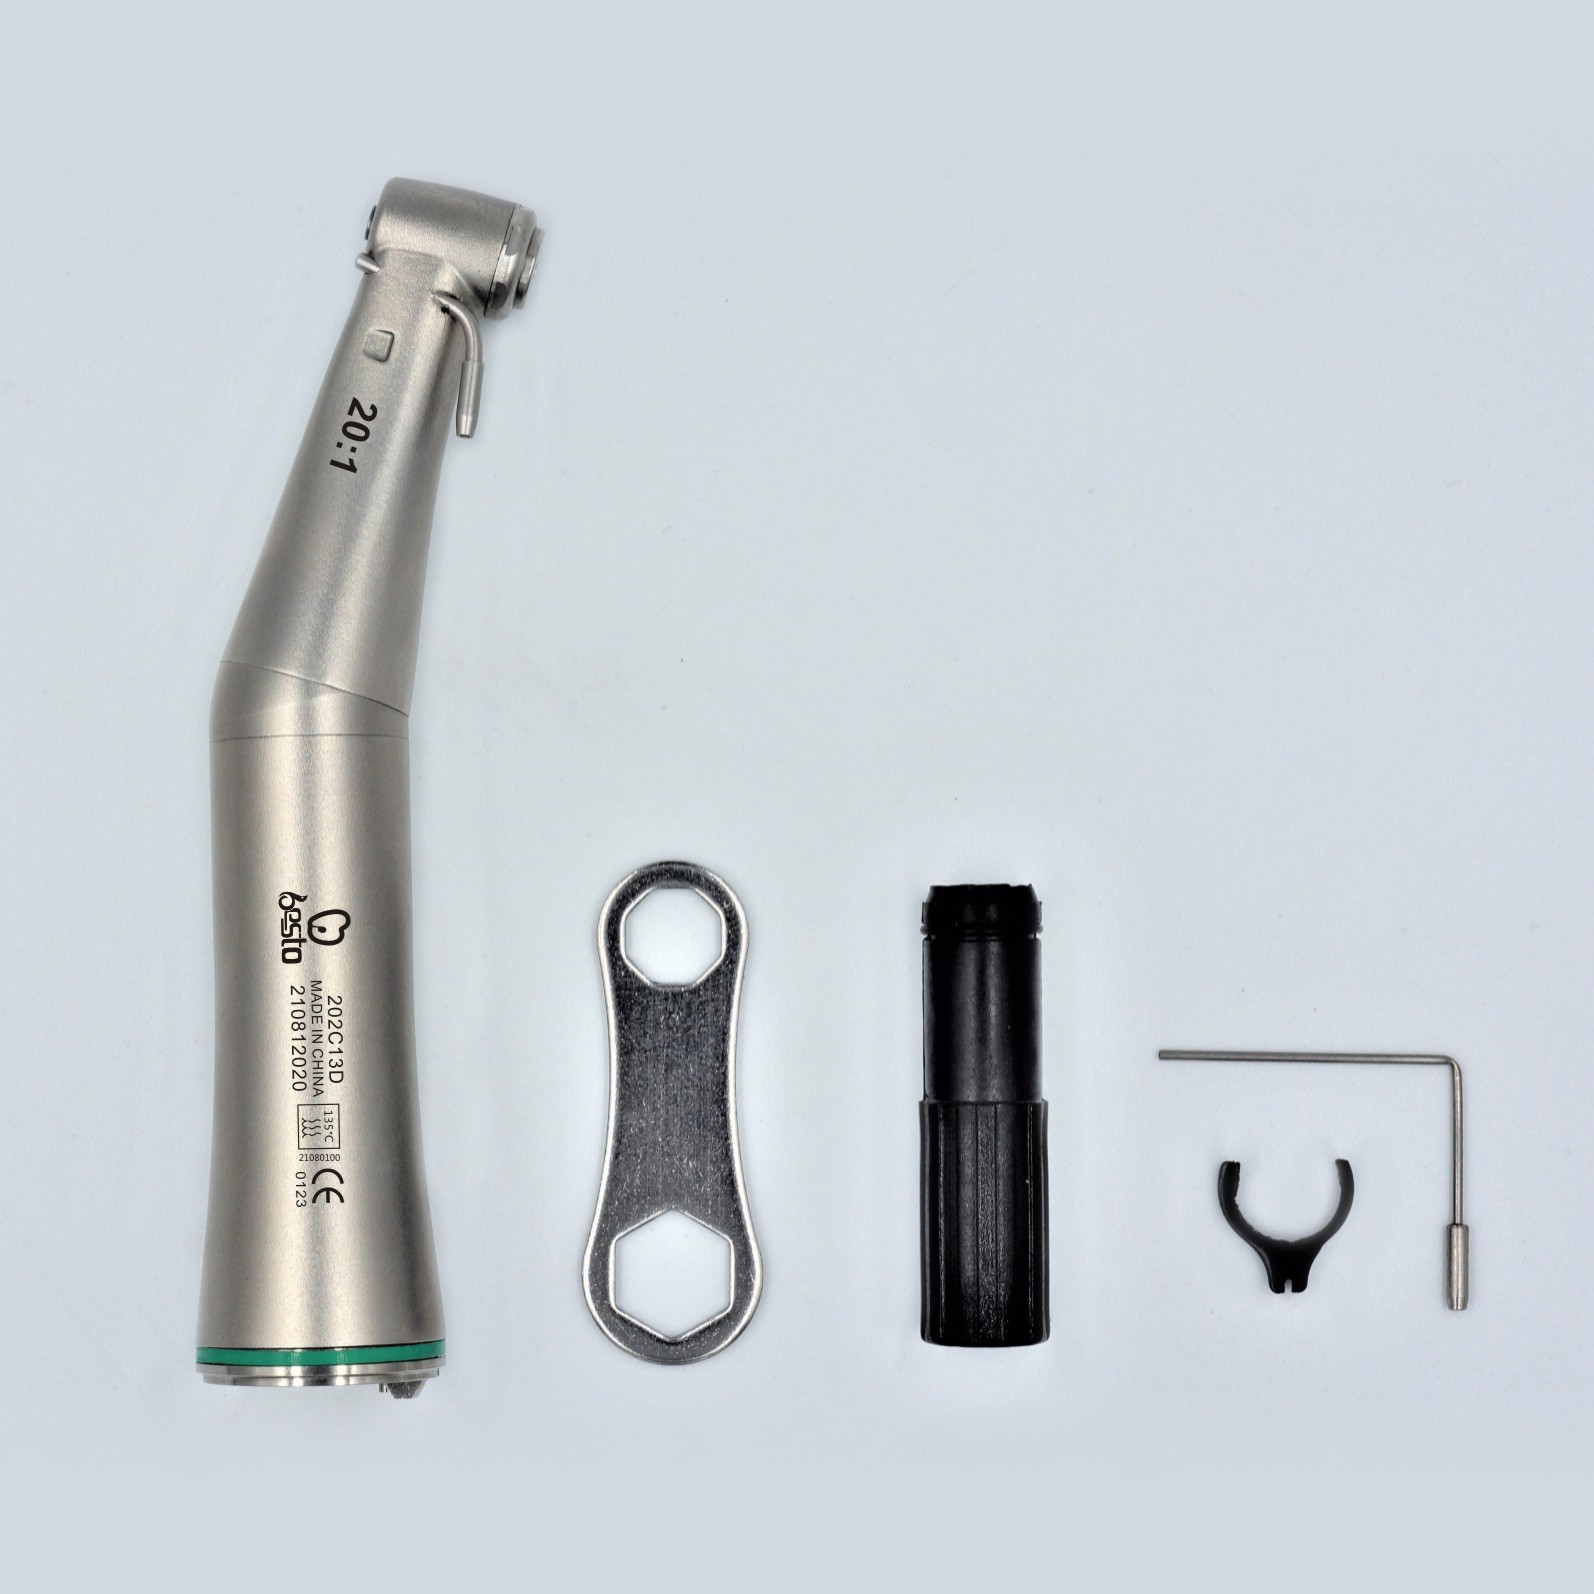 Fiber optic 20:1 Implant contra angle dental handpiece 202C13D